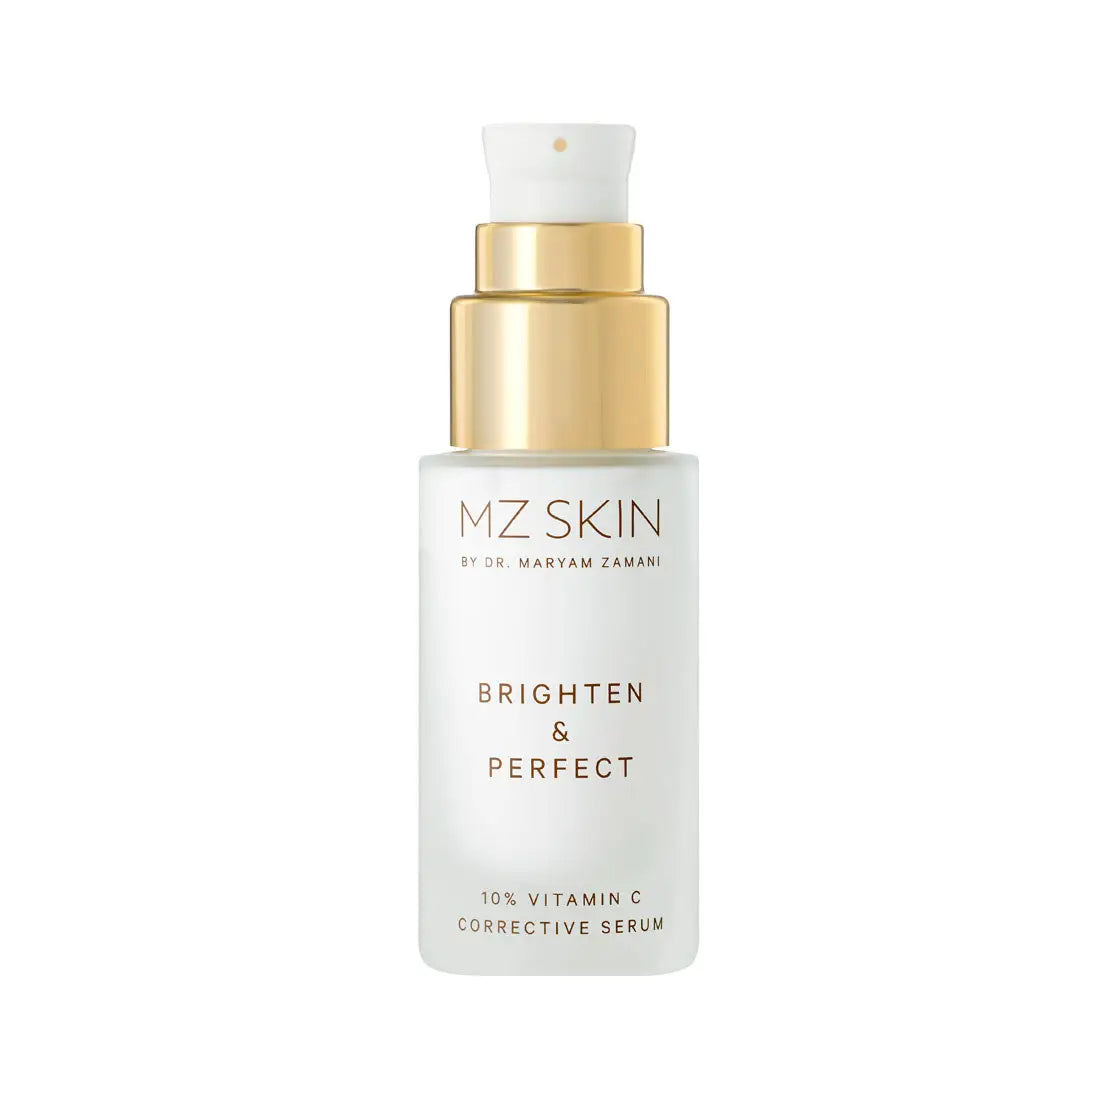 MZ Skin Brighten & Perfect 10% Vitamin C Corrective Serum 